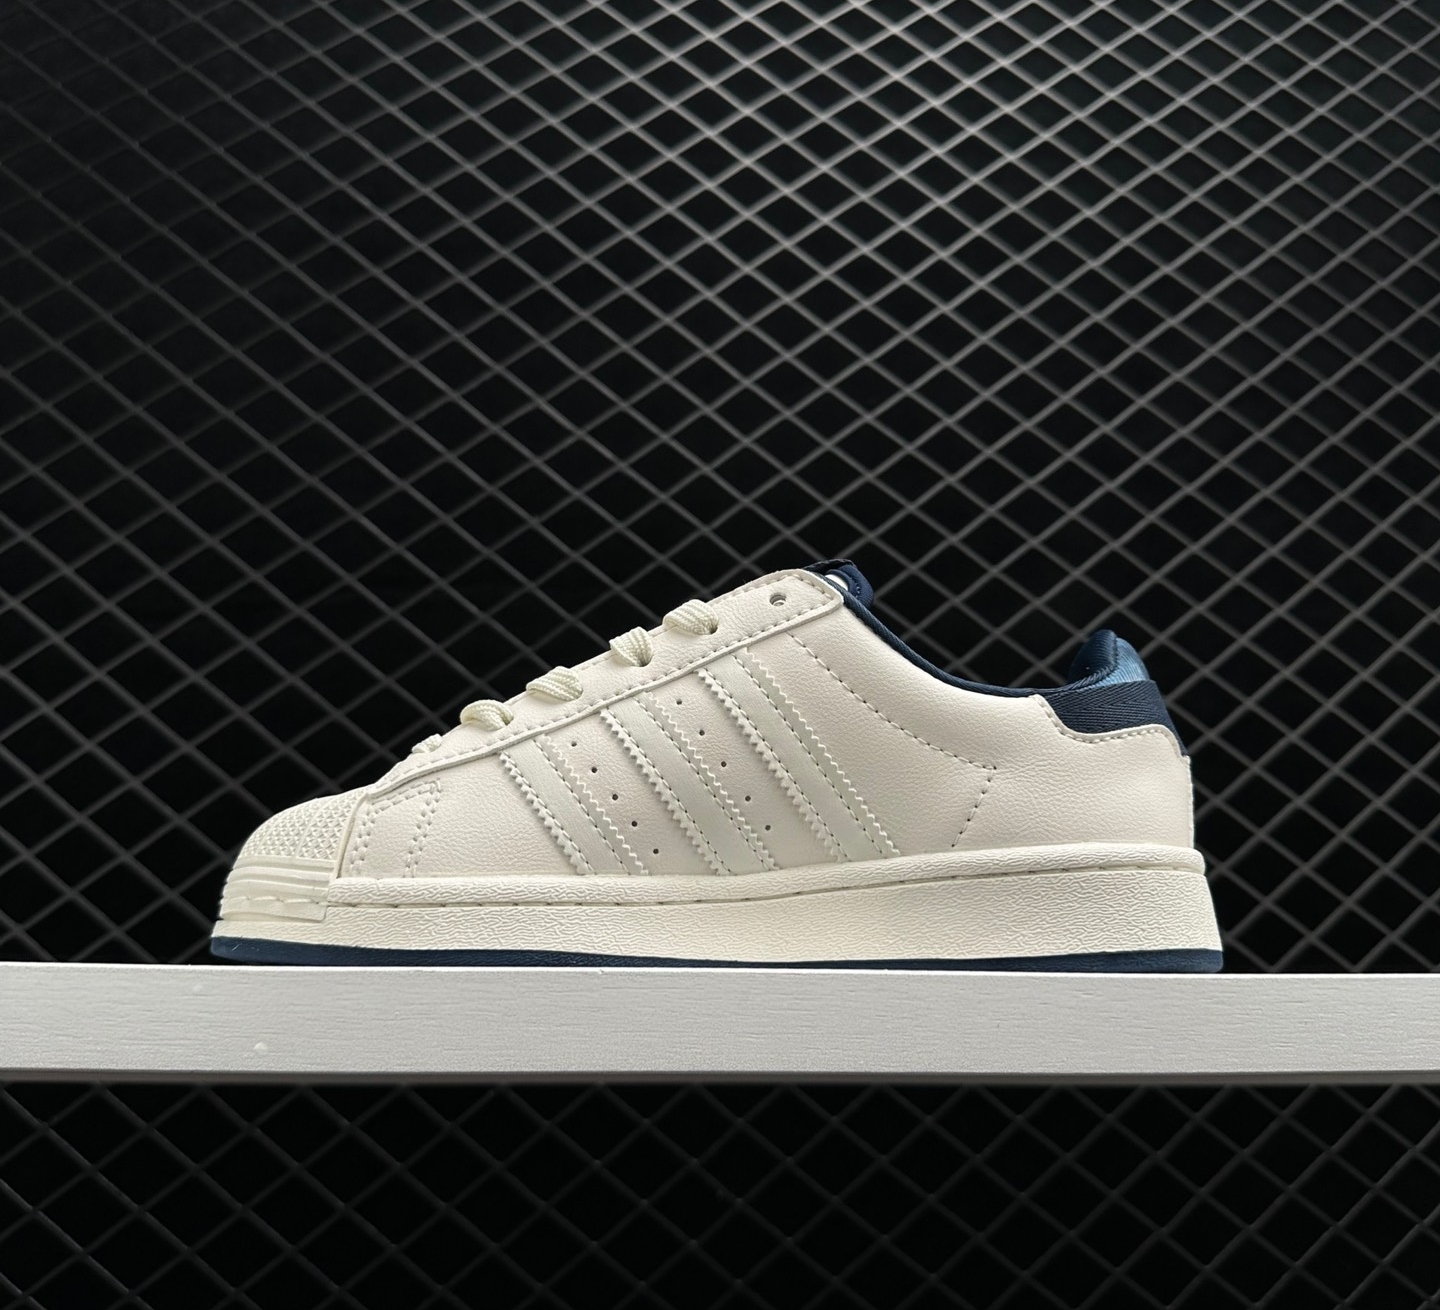 Adidas Originals Superstar Creamwhite Blue GW2045 - Stylish and Classic Shoes